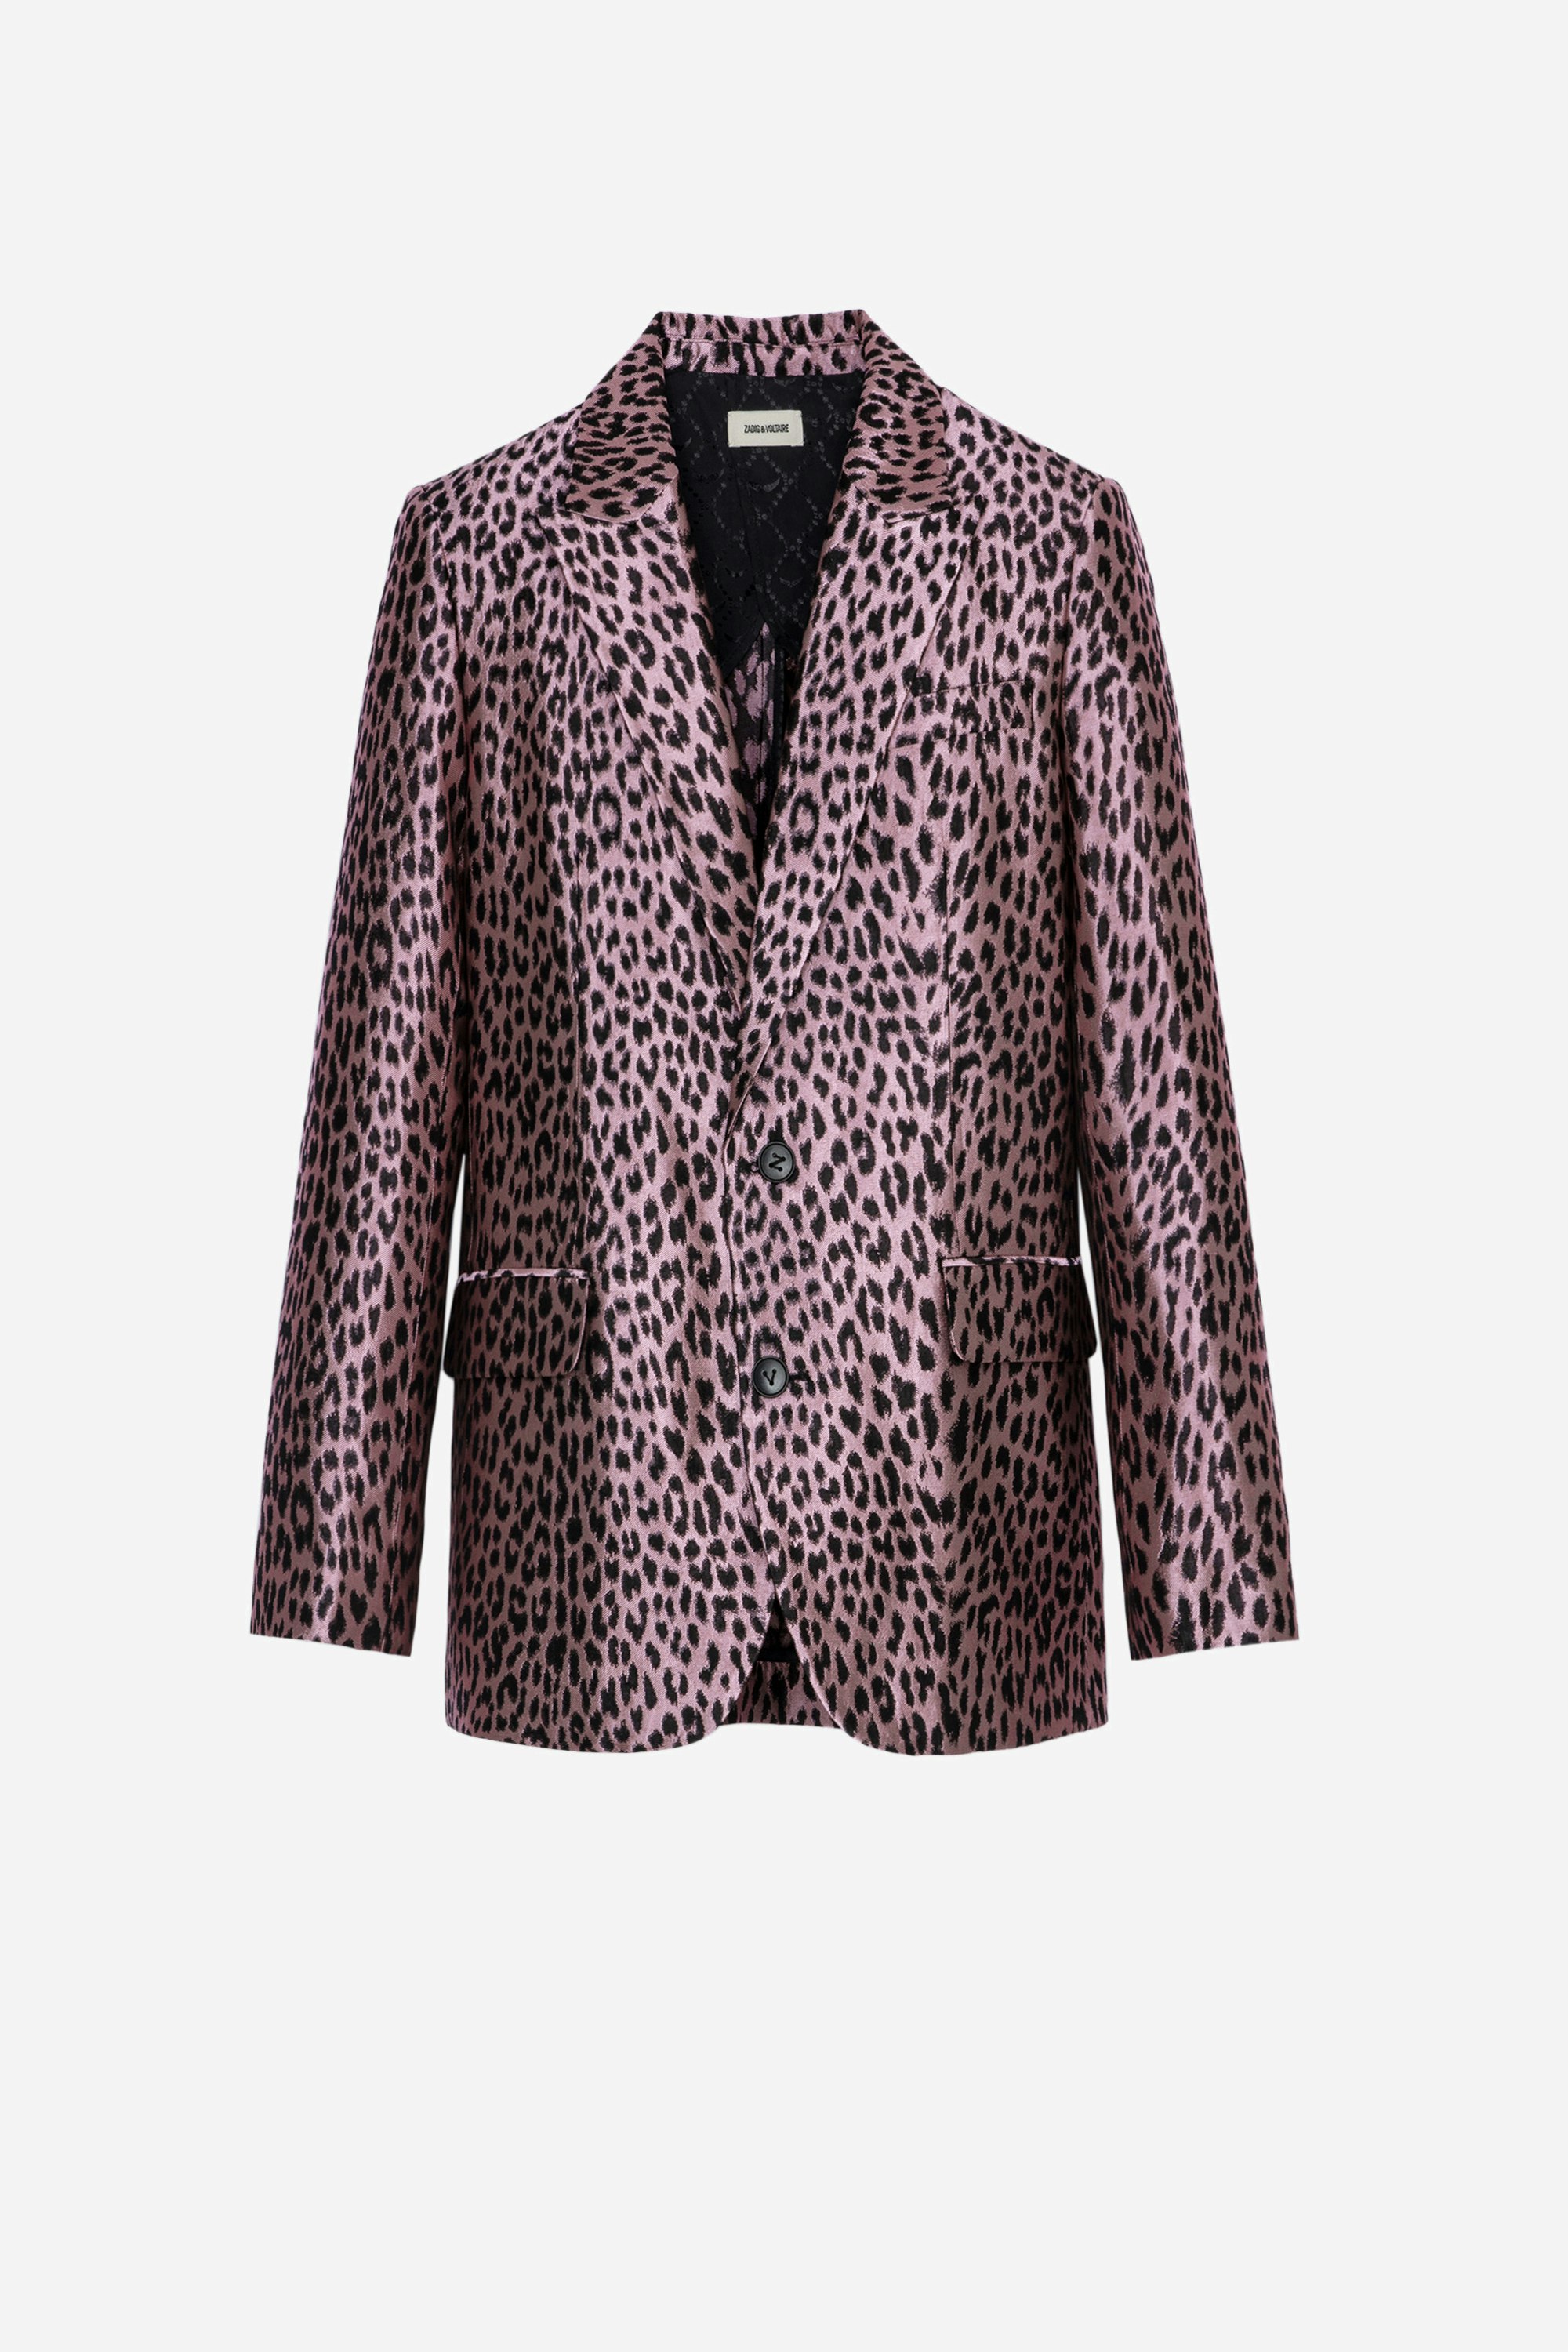 Vegy Leopard Jacquard Blazer Women's pink leopard jacquard blazer.